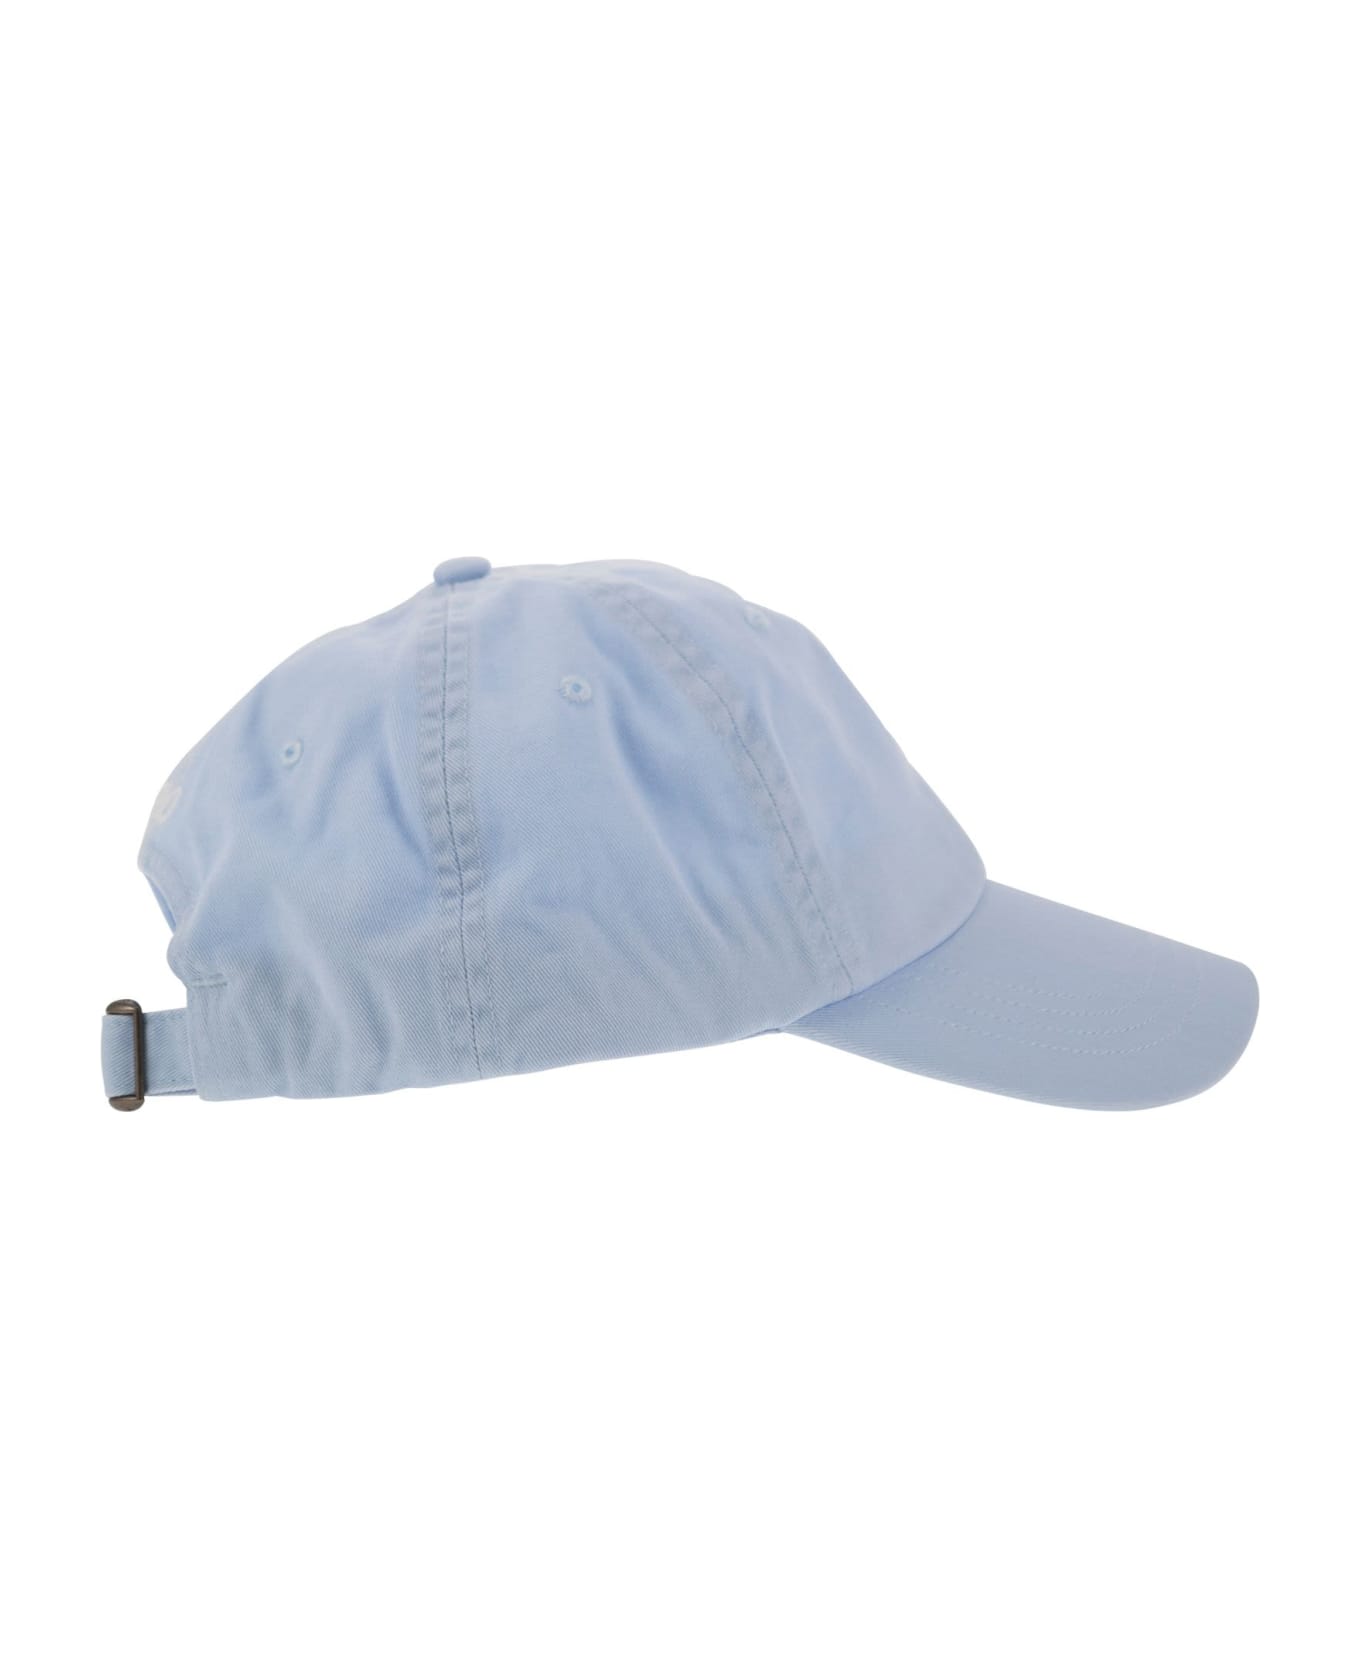 Polo Ralph Lauren Cotton Chino Hat - Light Blue